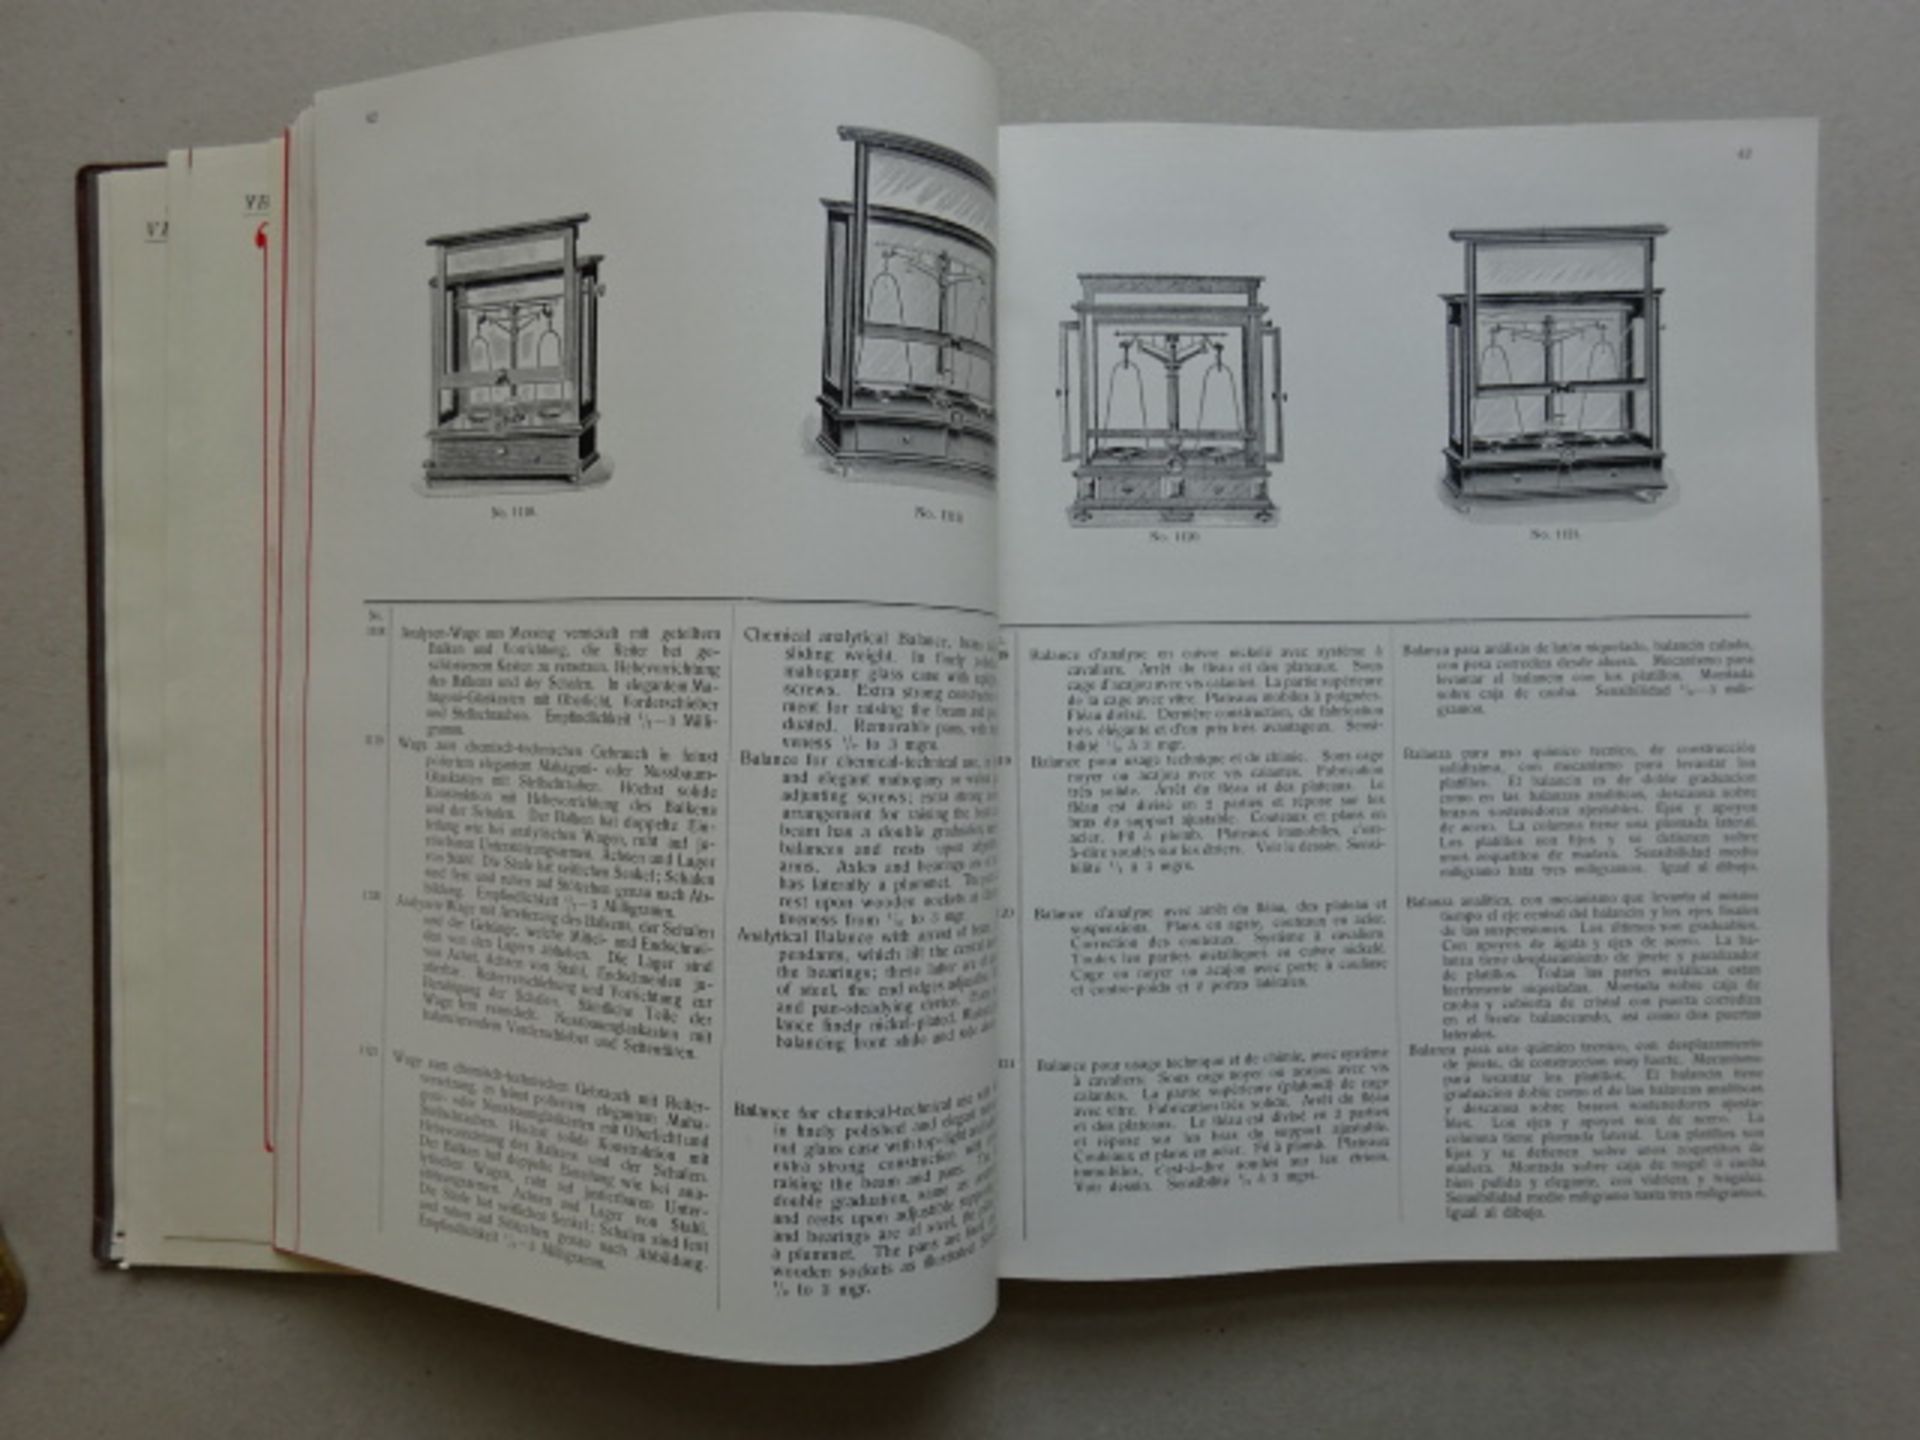 Birk - Katalog No. 4 - Image 4 of 5